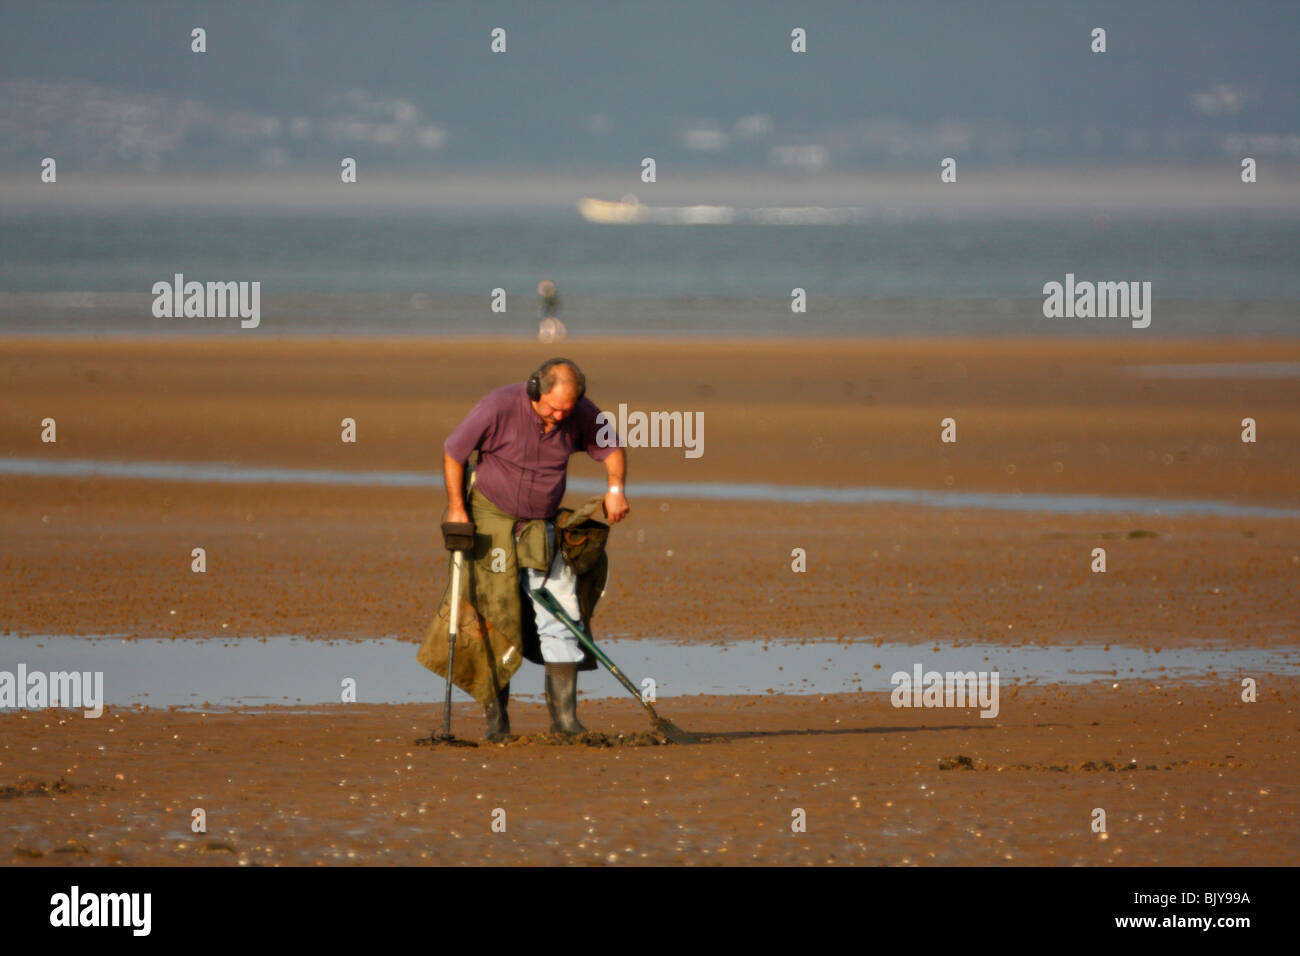 Man Using a Metal Detector on a Sandy Beach Stock Photo